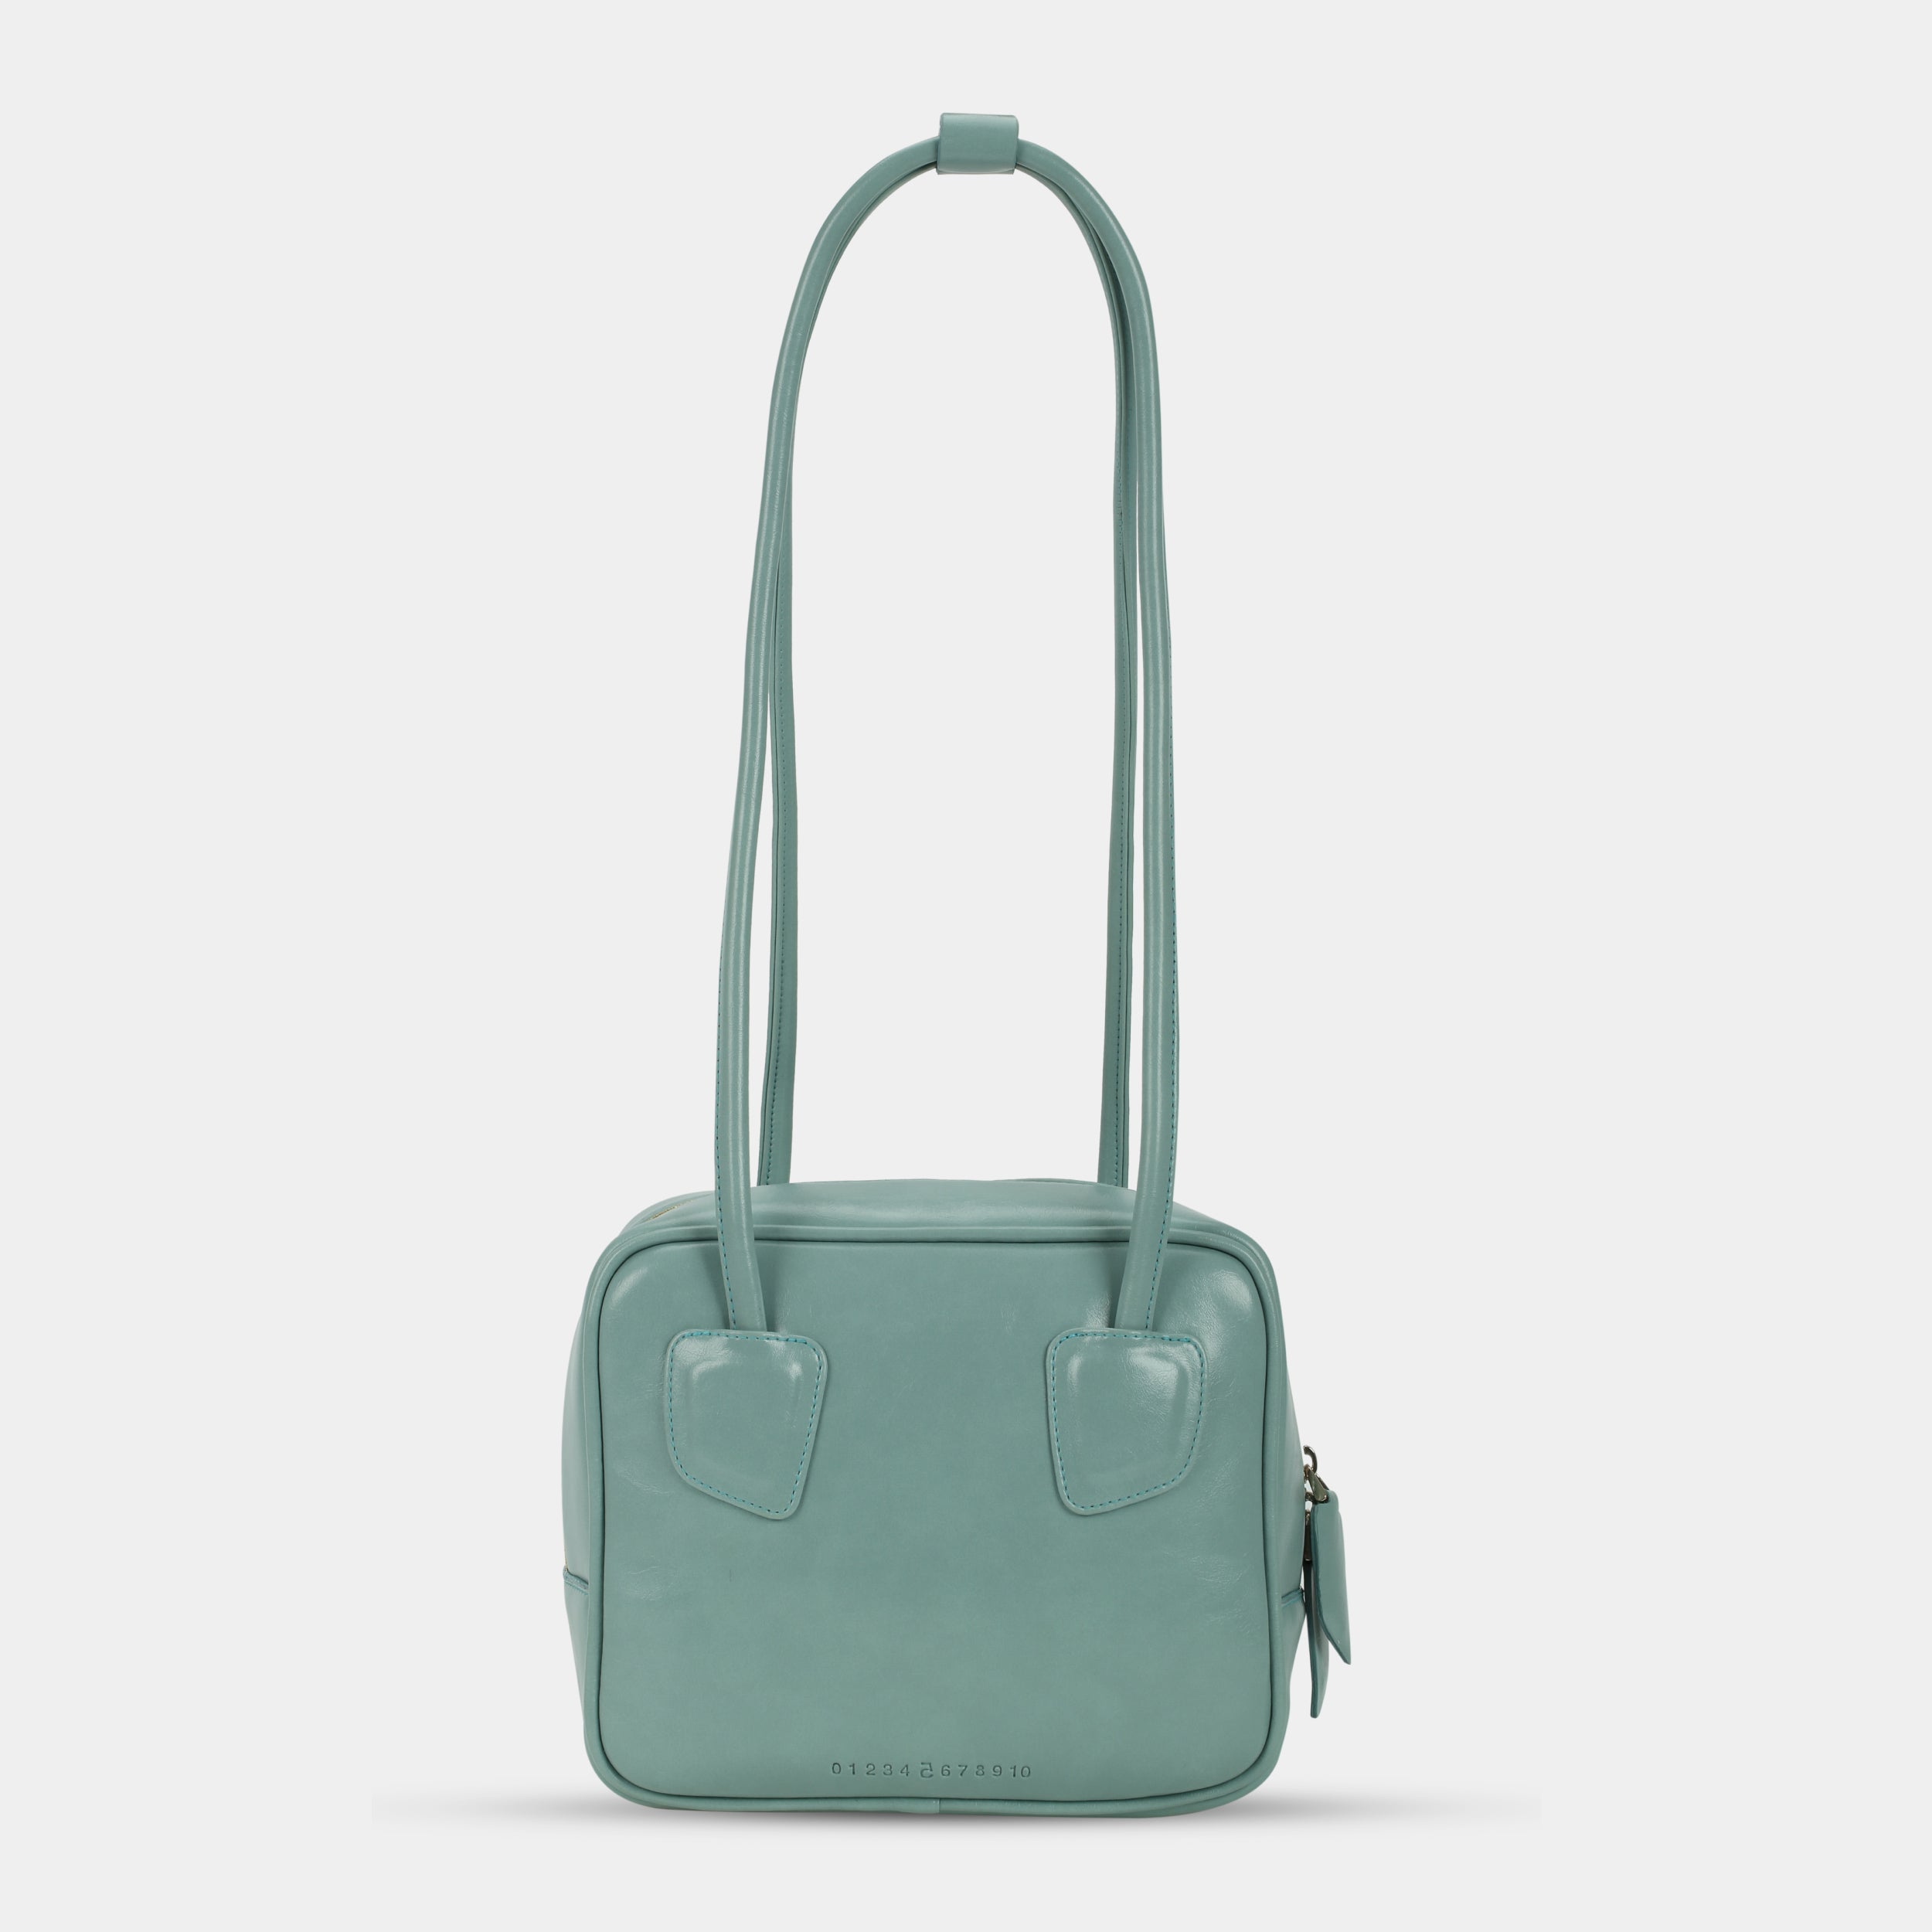 SANDWICH handbag in pastel turquoise